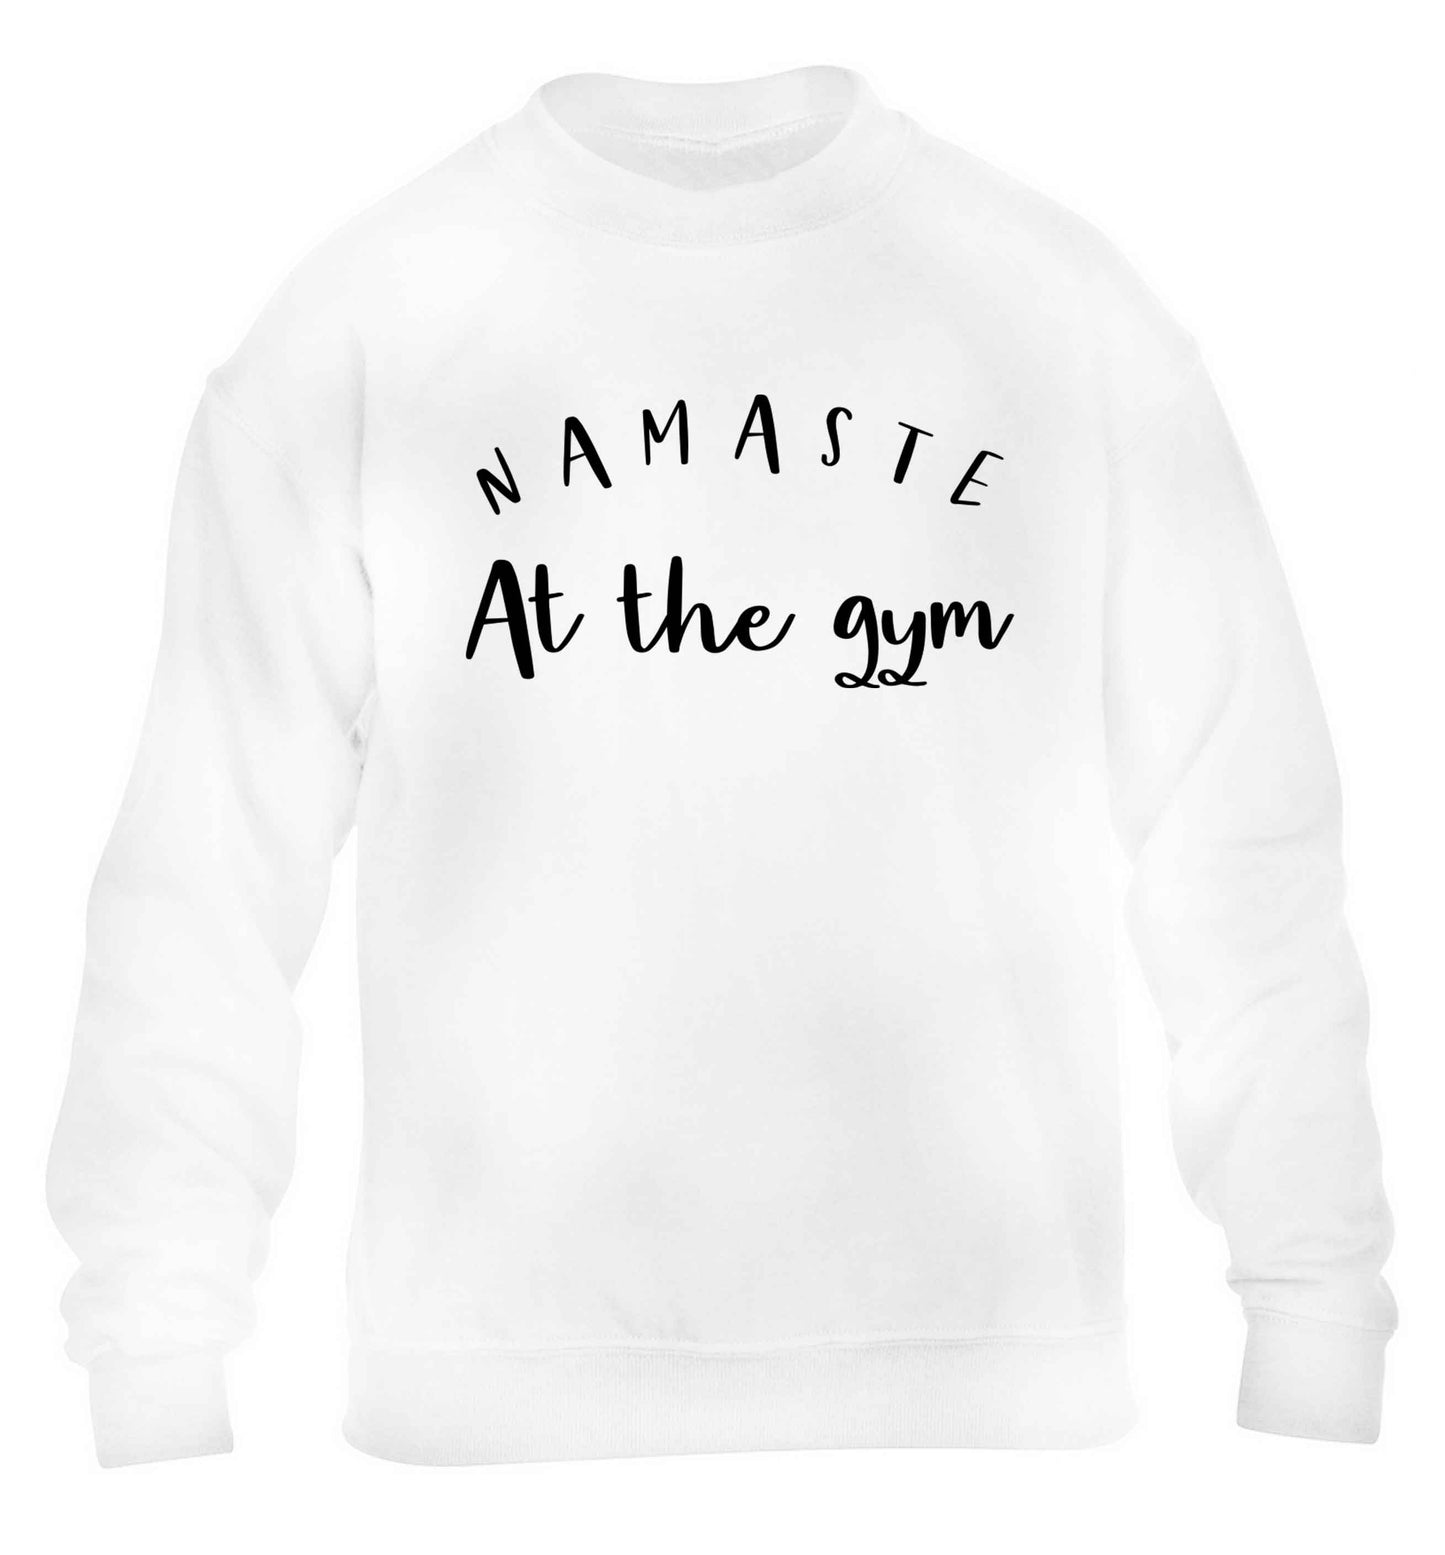 Namaste at the gym children's white sweater 12-13 Years